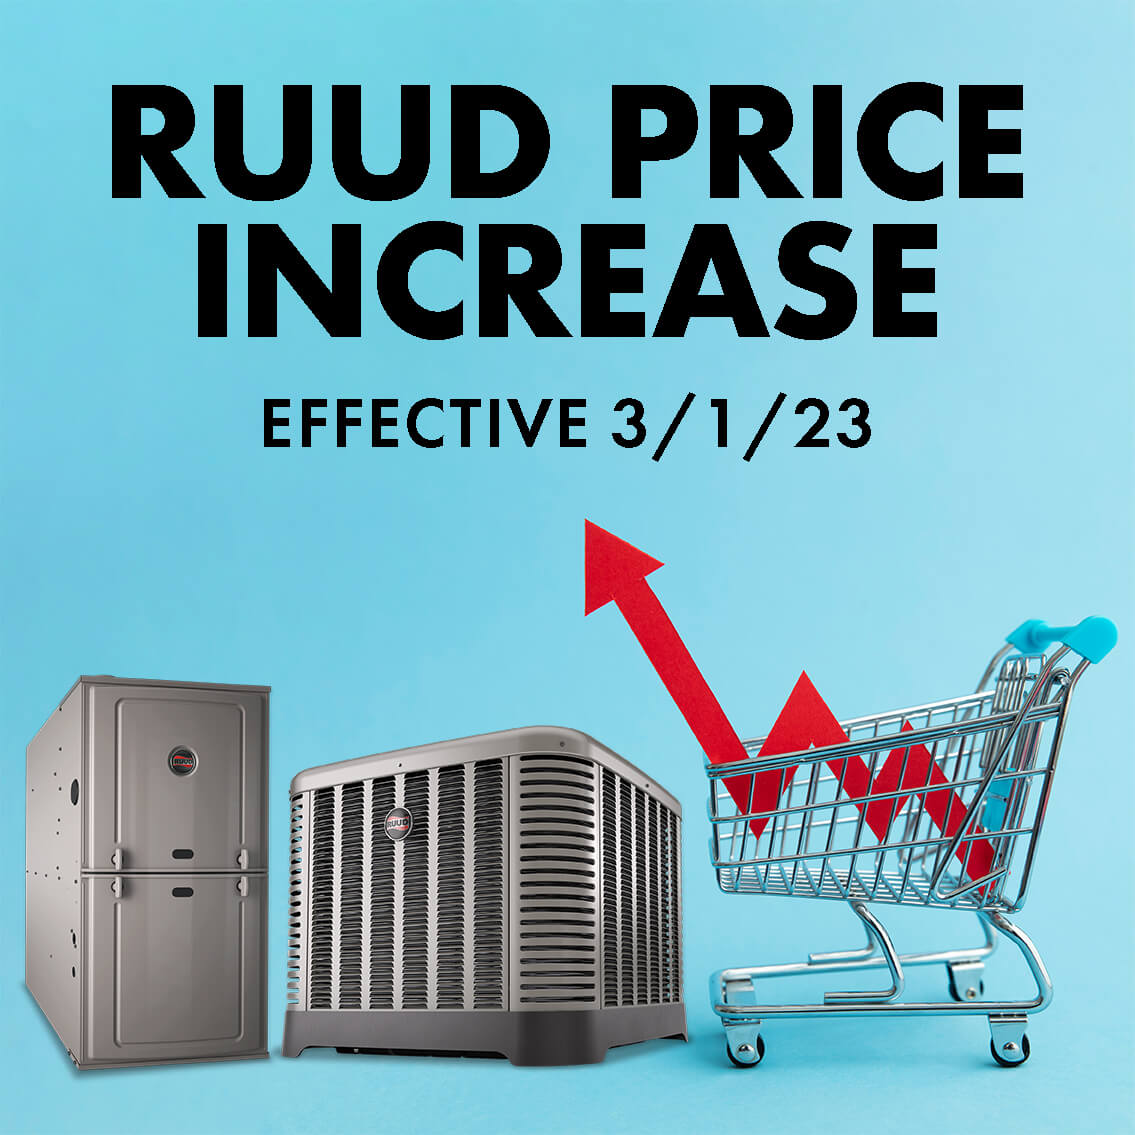 Ruud Price Increase Effective 3/1/23